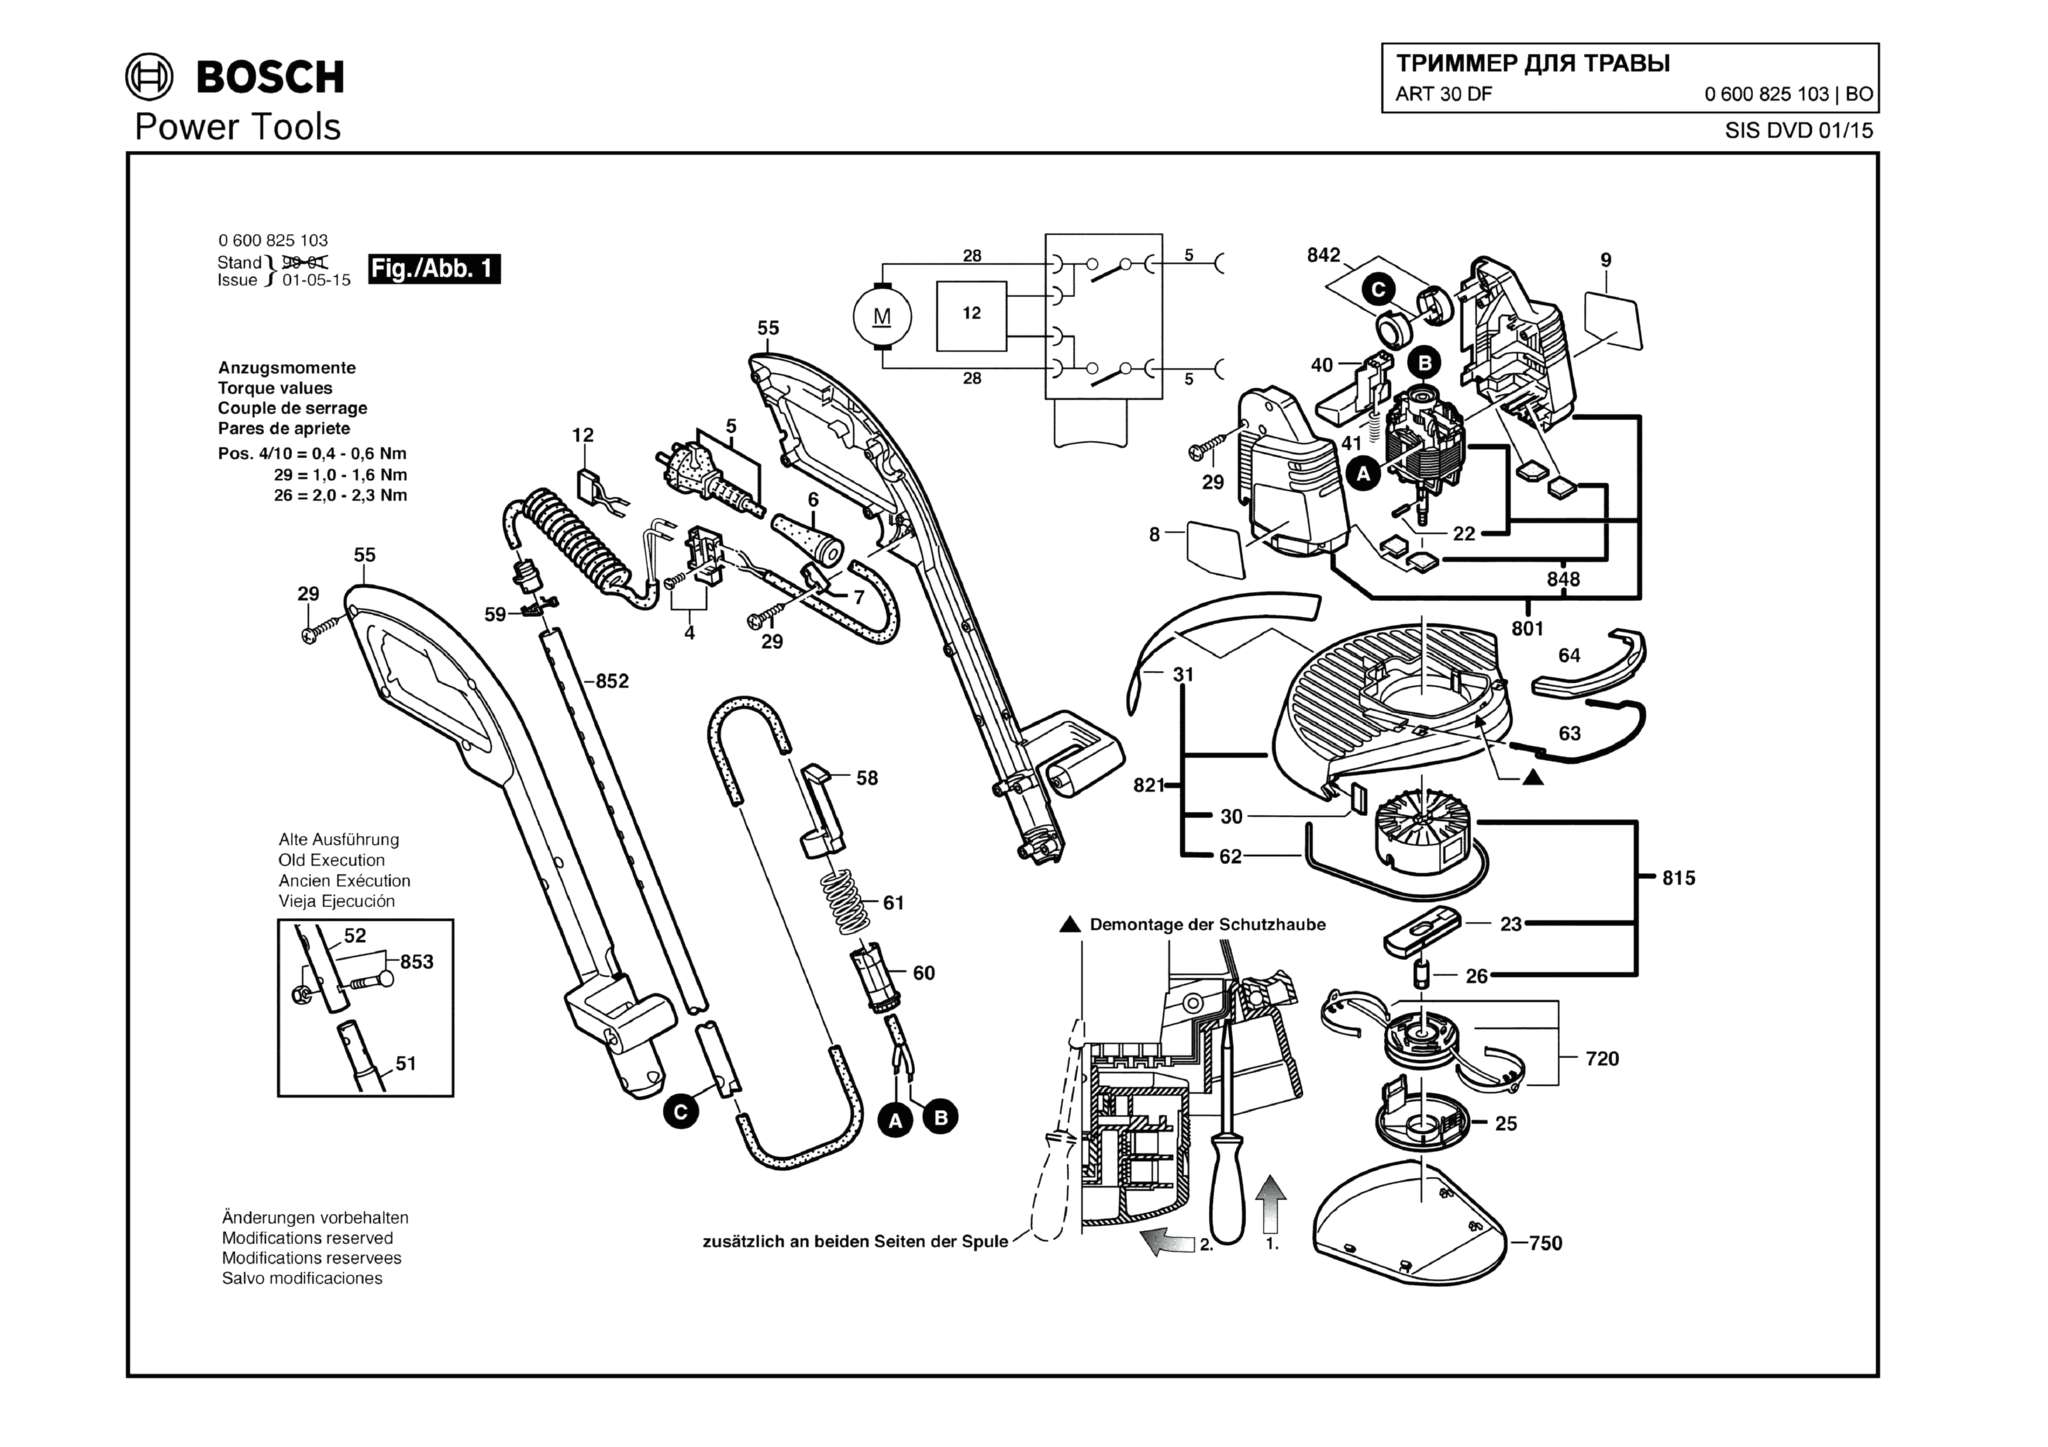 Запчасти, схема и деталировка Bosch ART 30 DF (ТИП 0600825103)